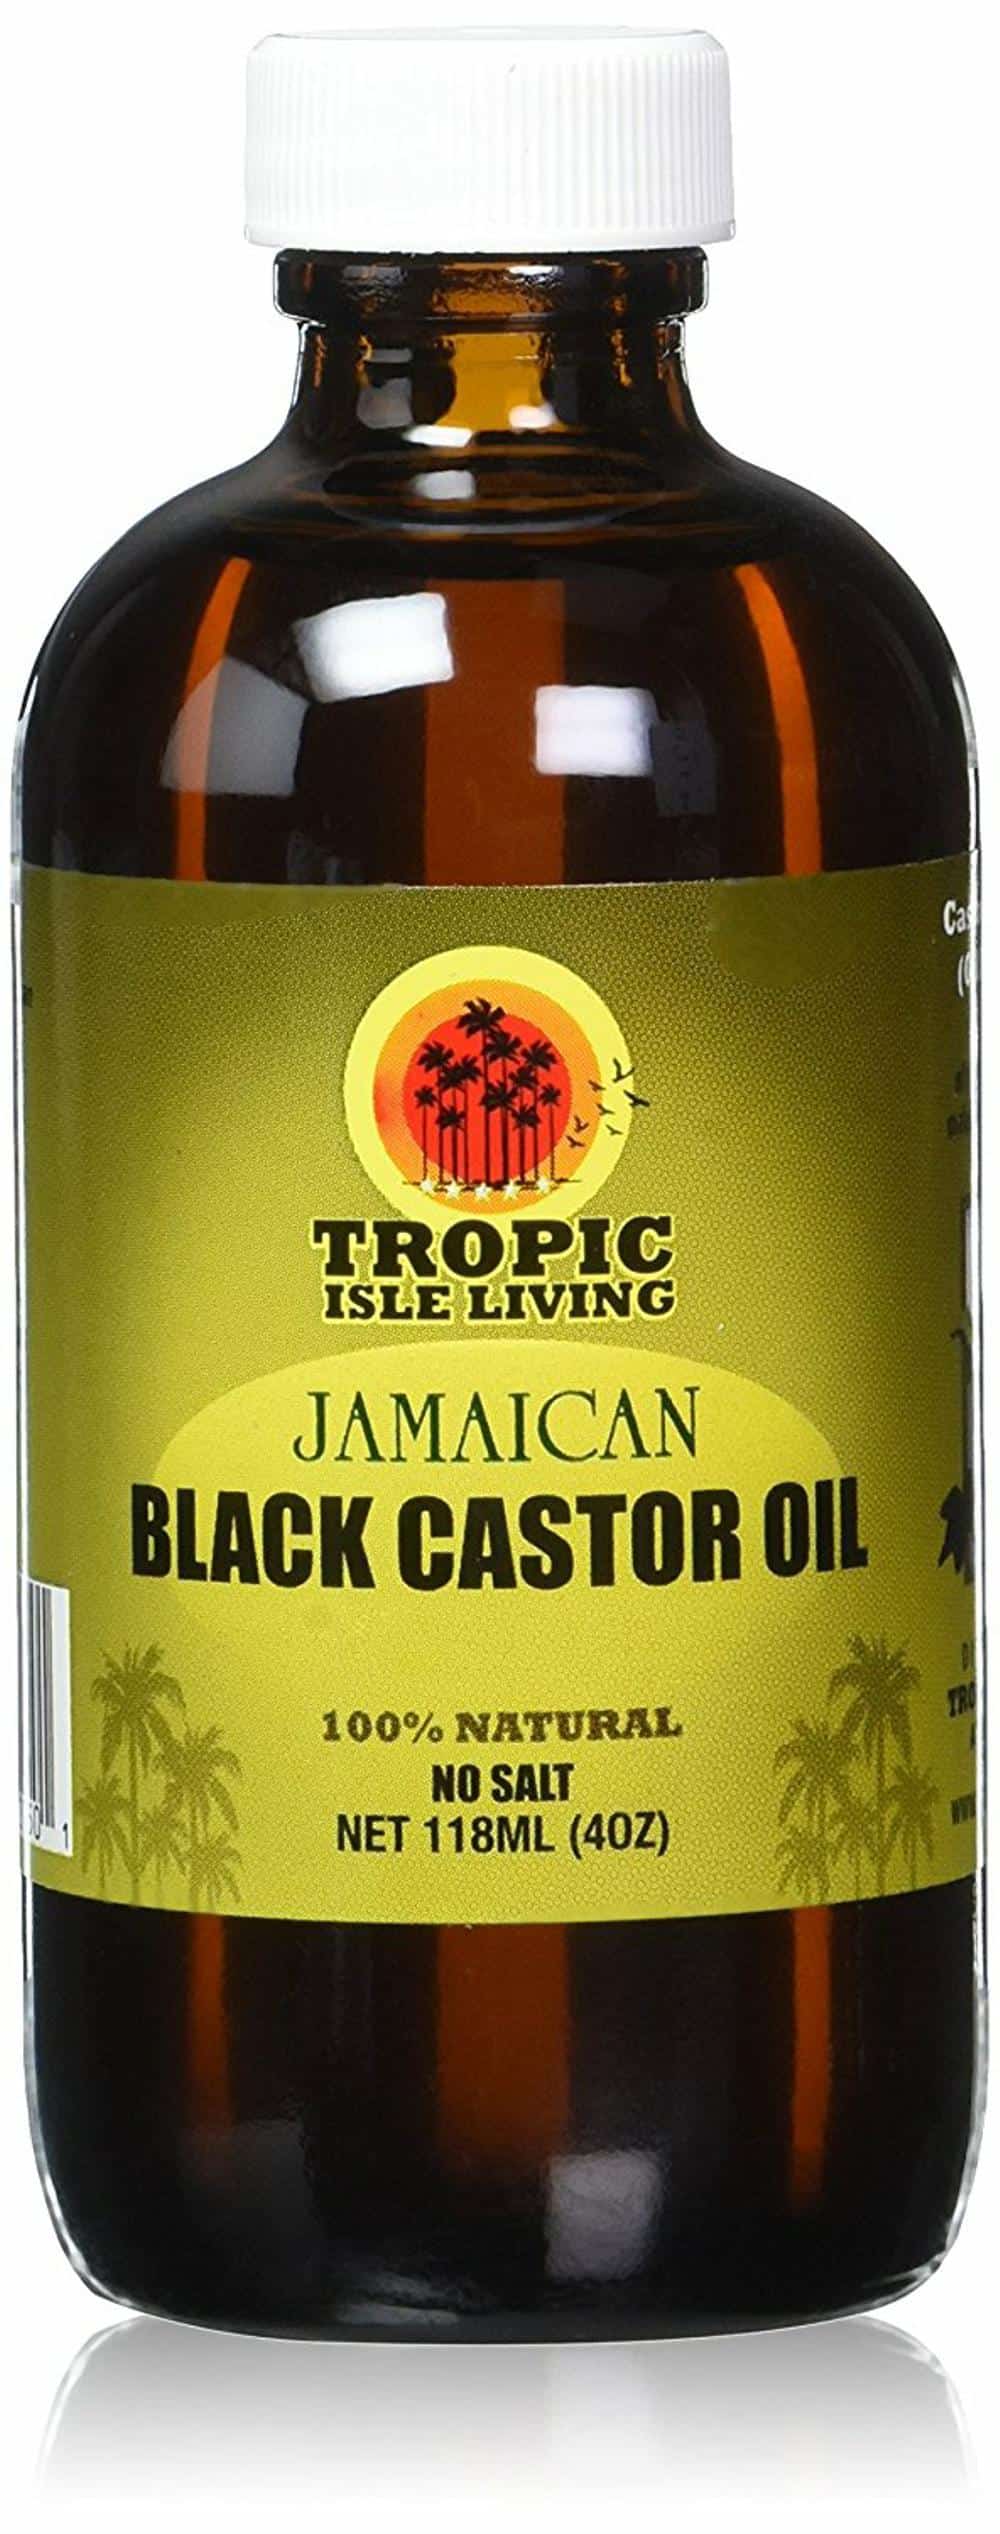 Jamaican Black Castor Oil - The Honest Review [November. 2019]